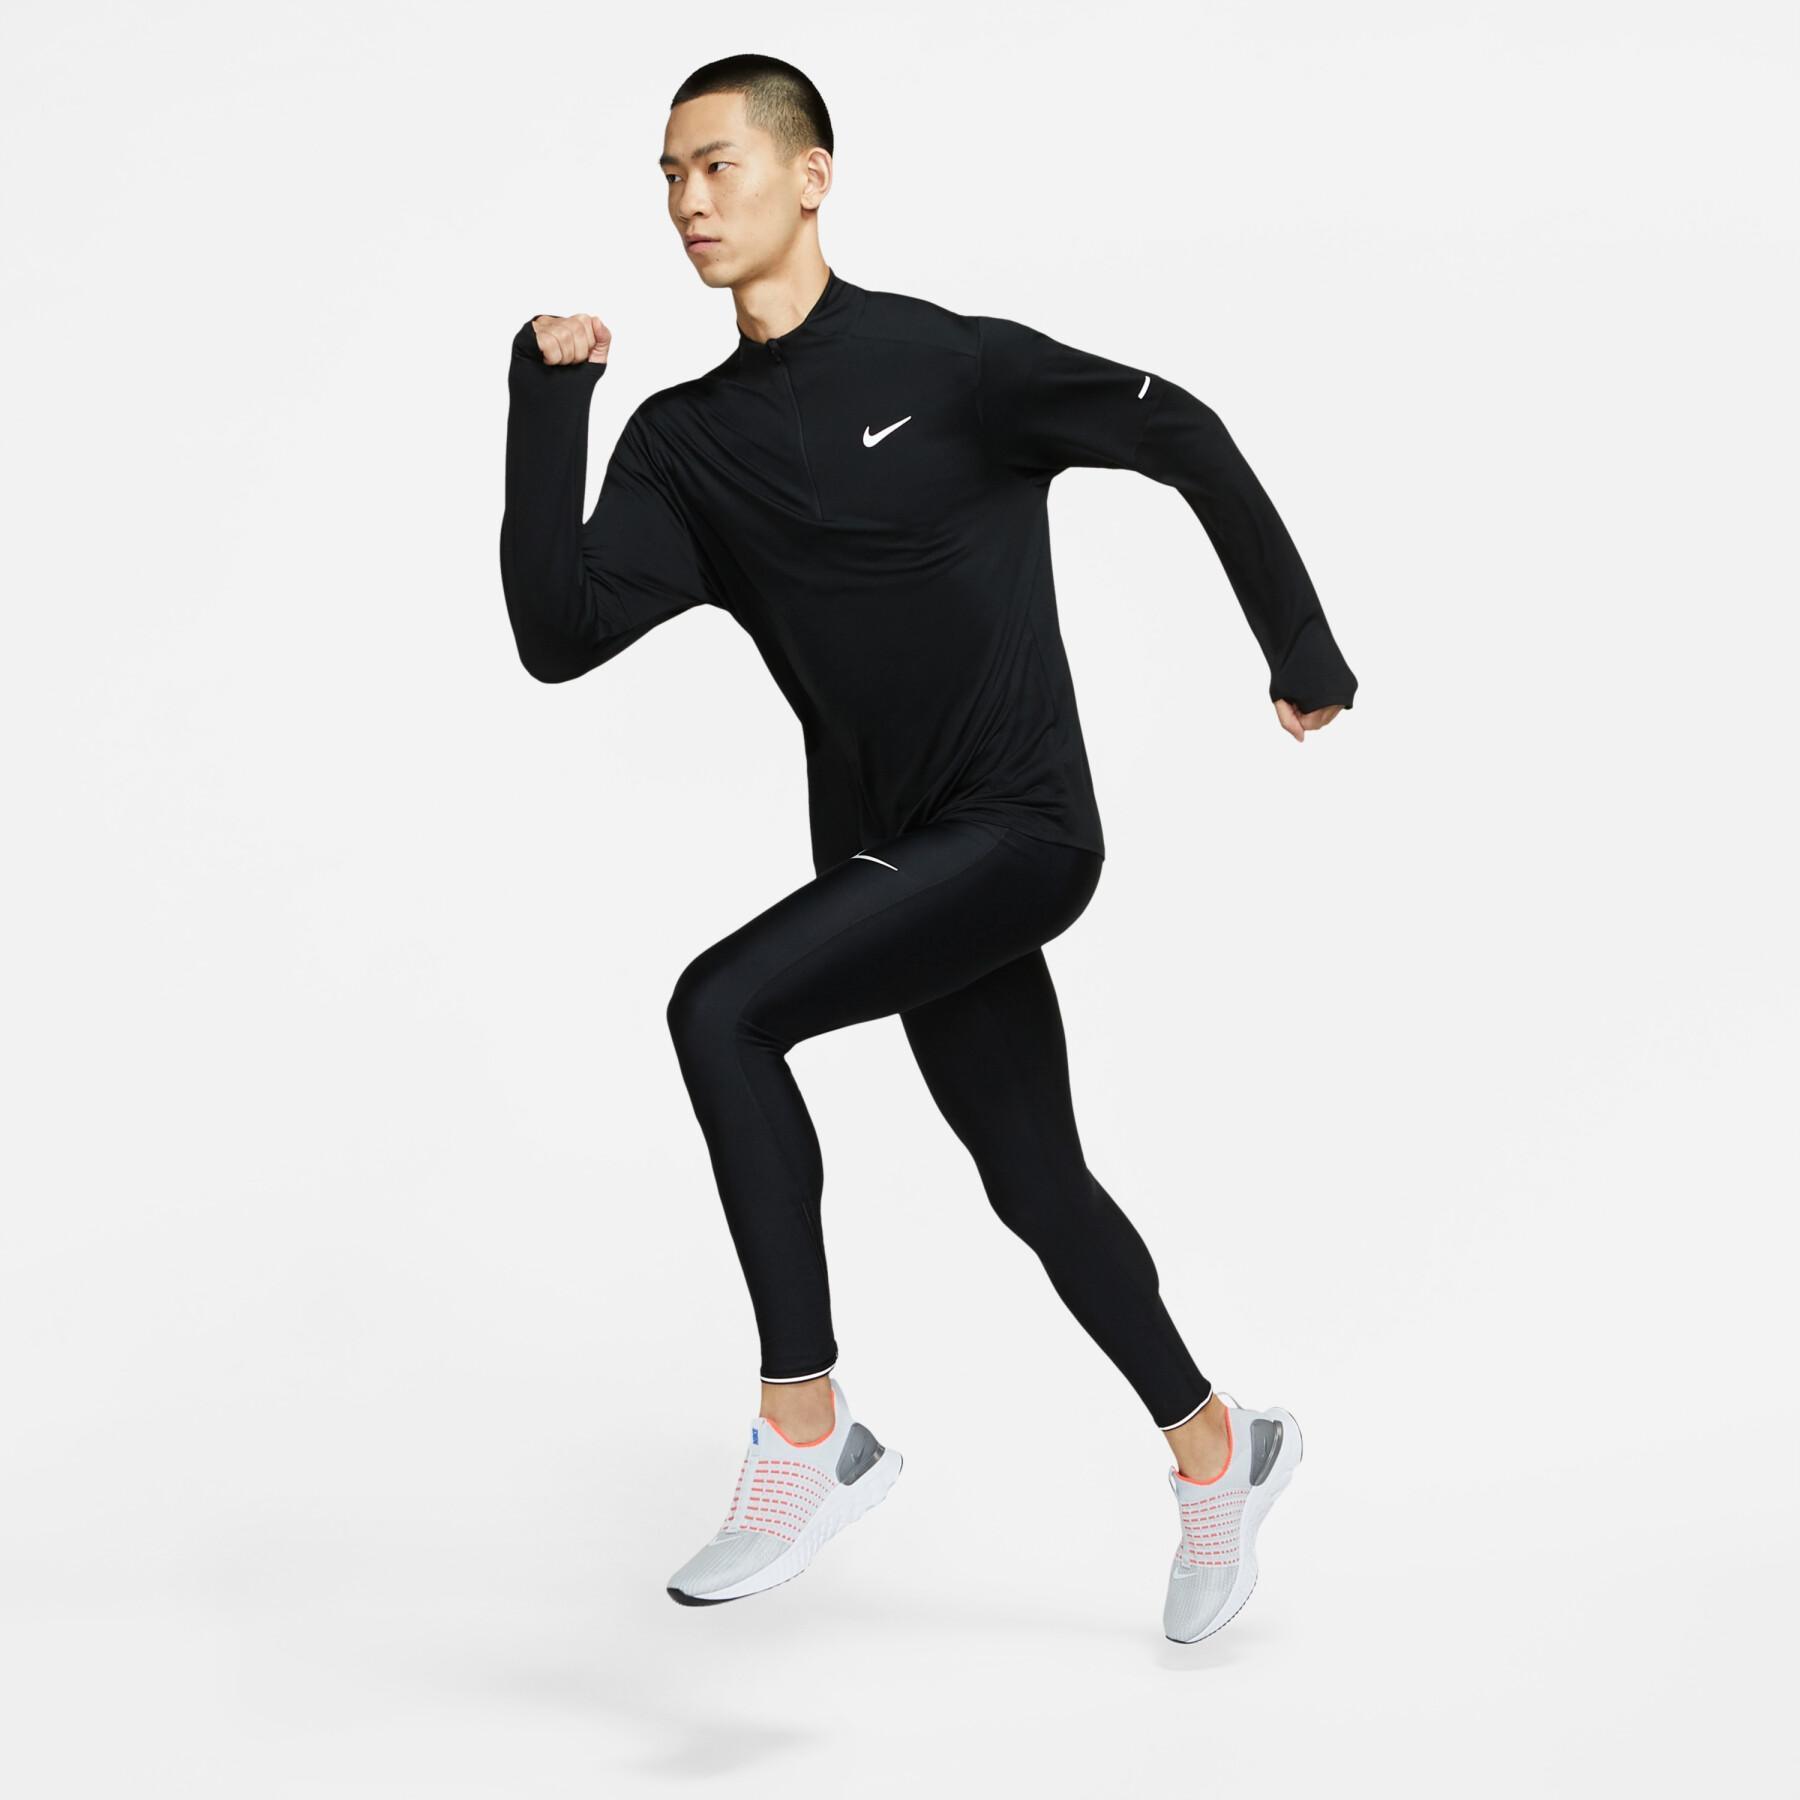 Jacka Nike dynamic fit elmnt top hz